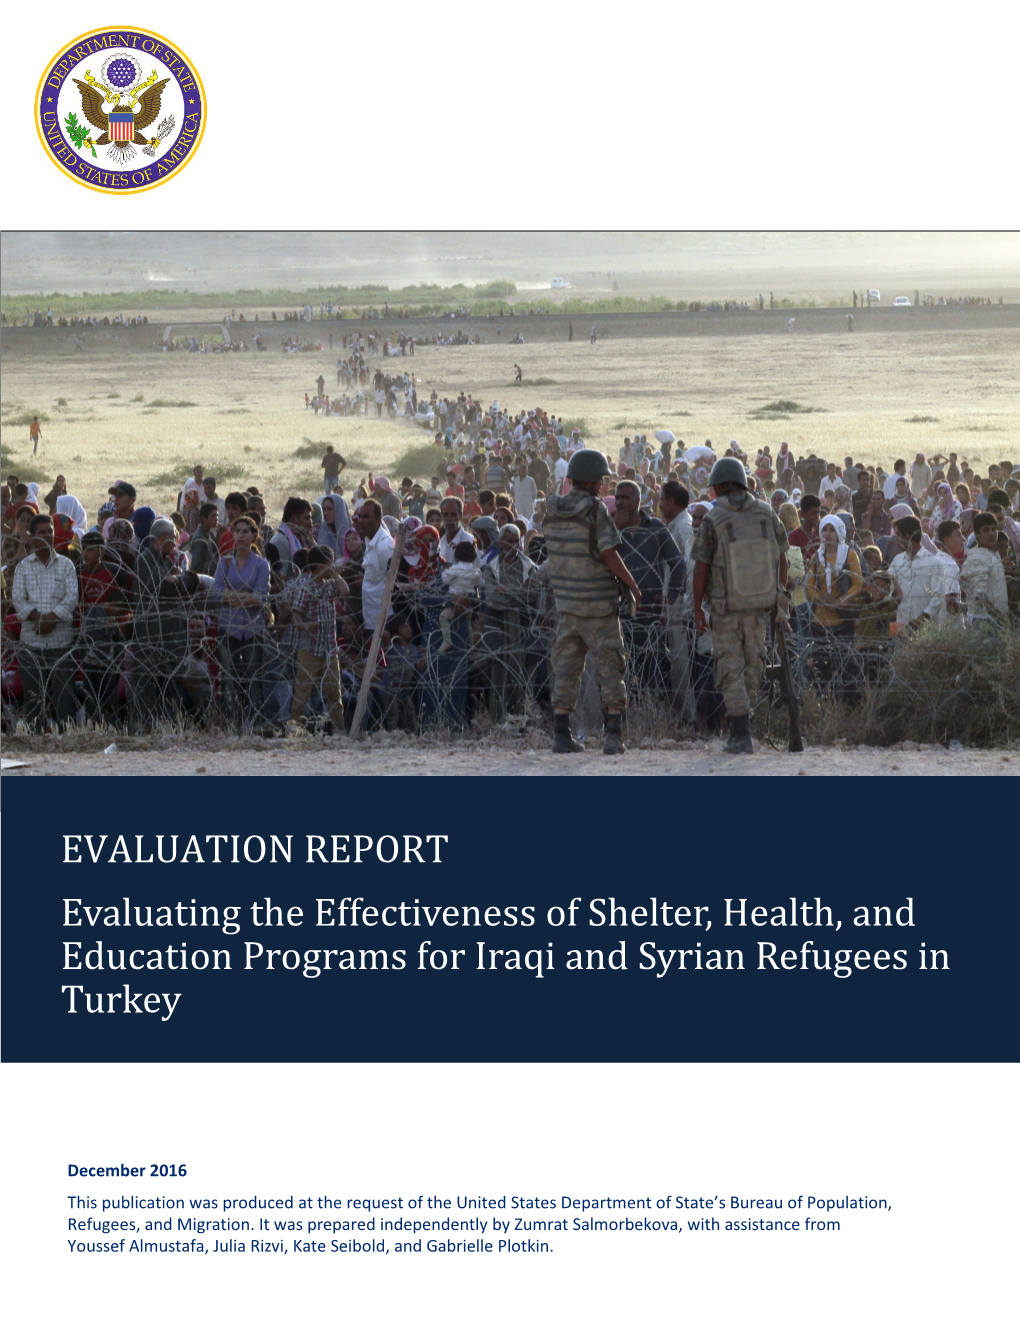 PRM Turkey Evaluation Report